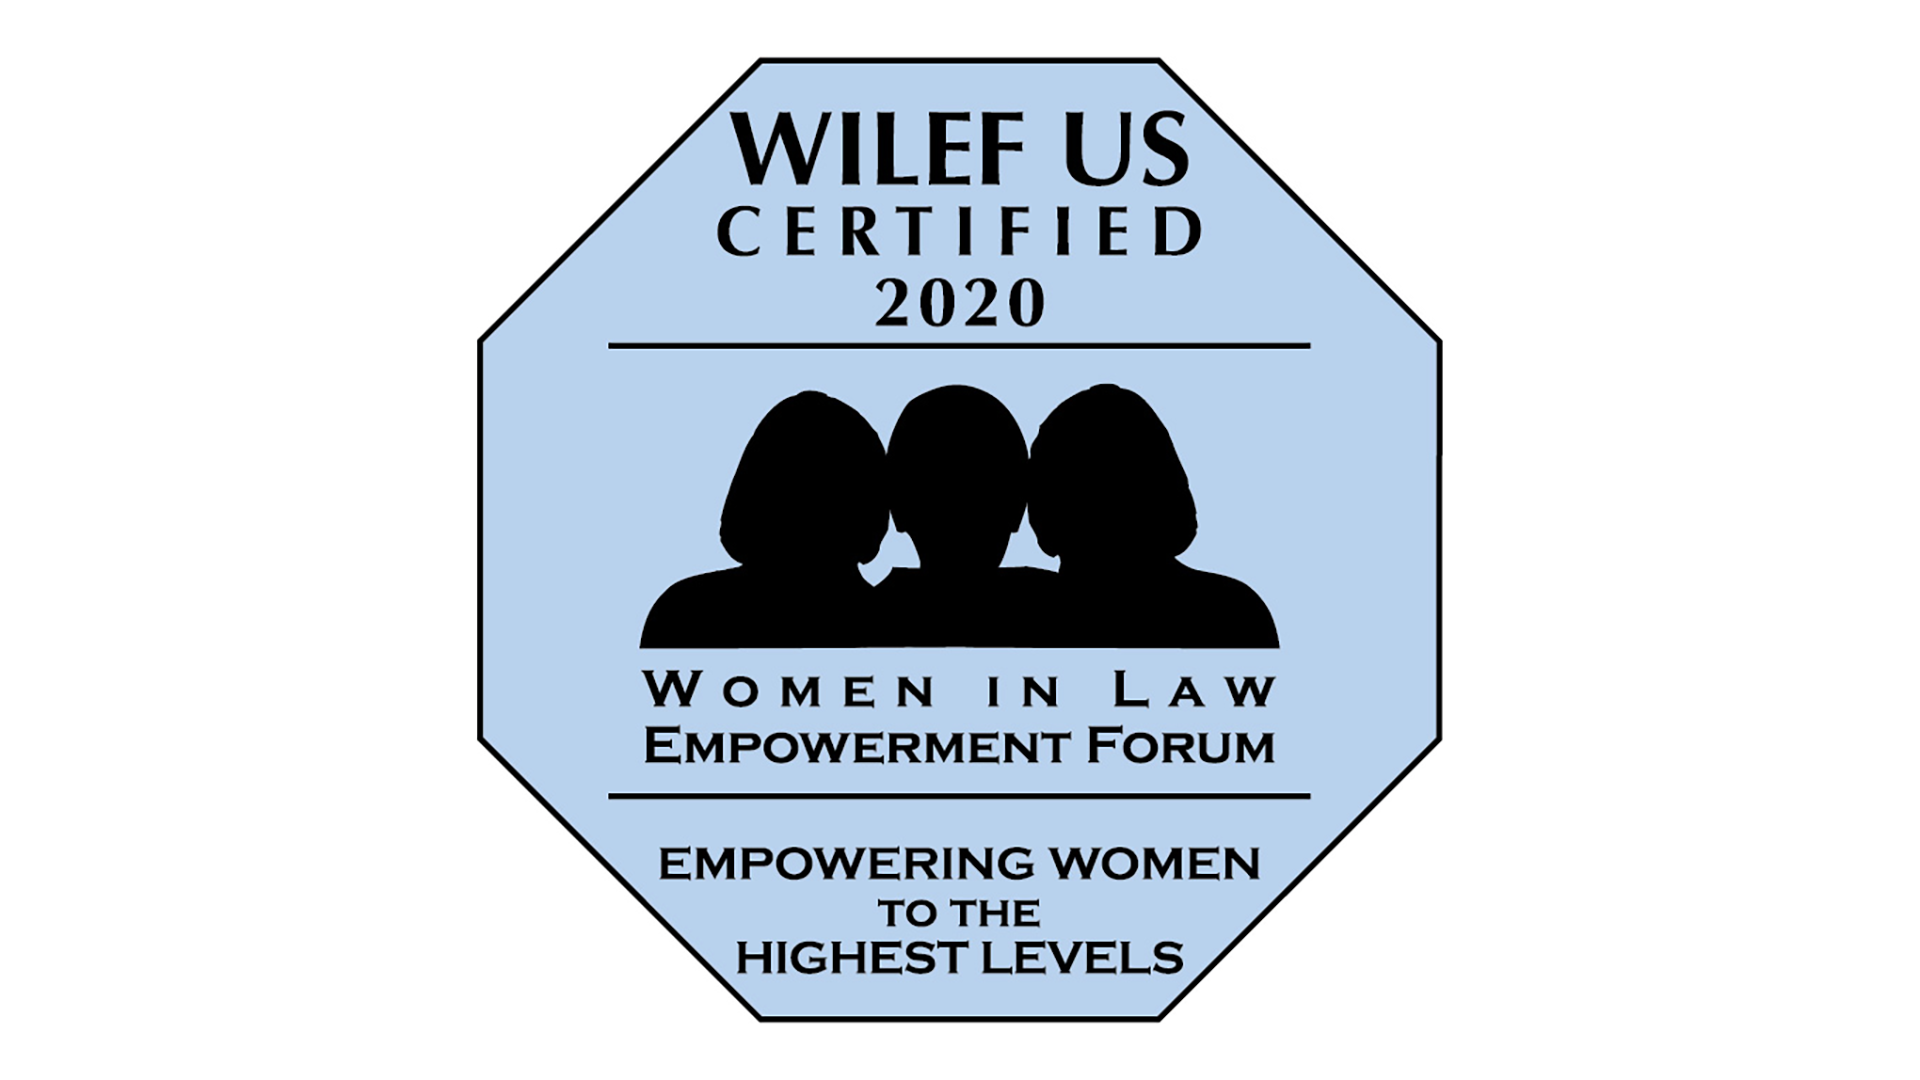 WILEF US Certified 2020 badge